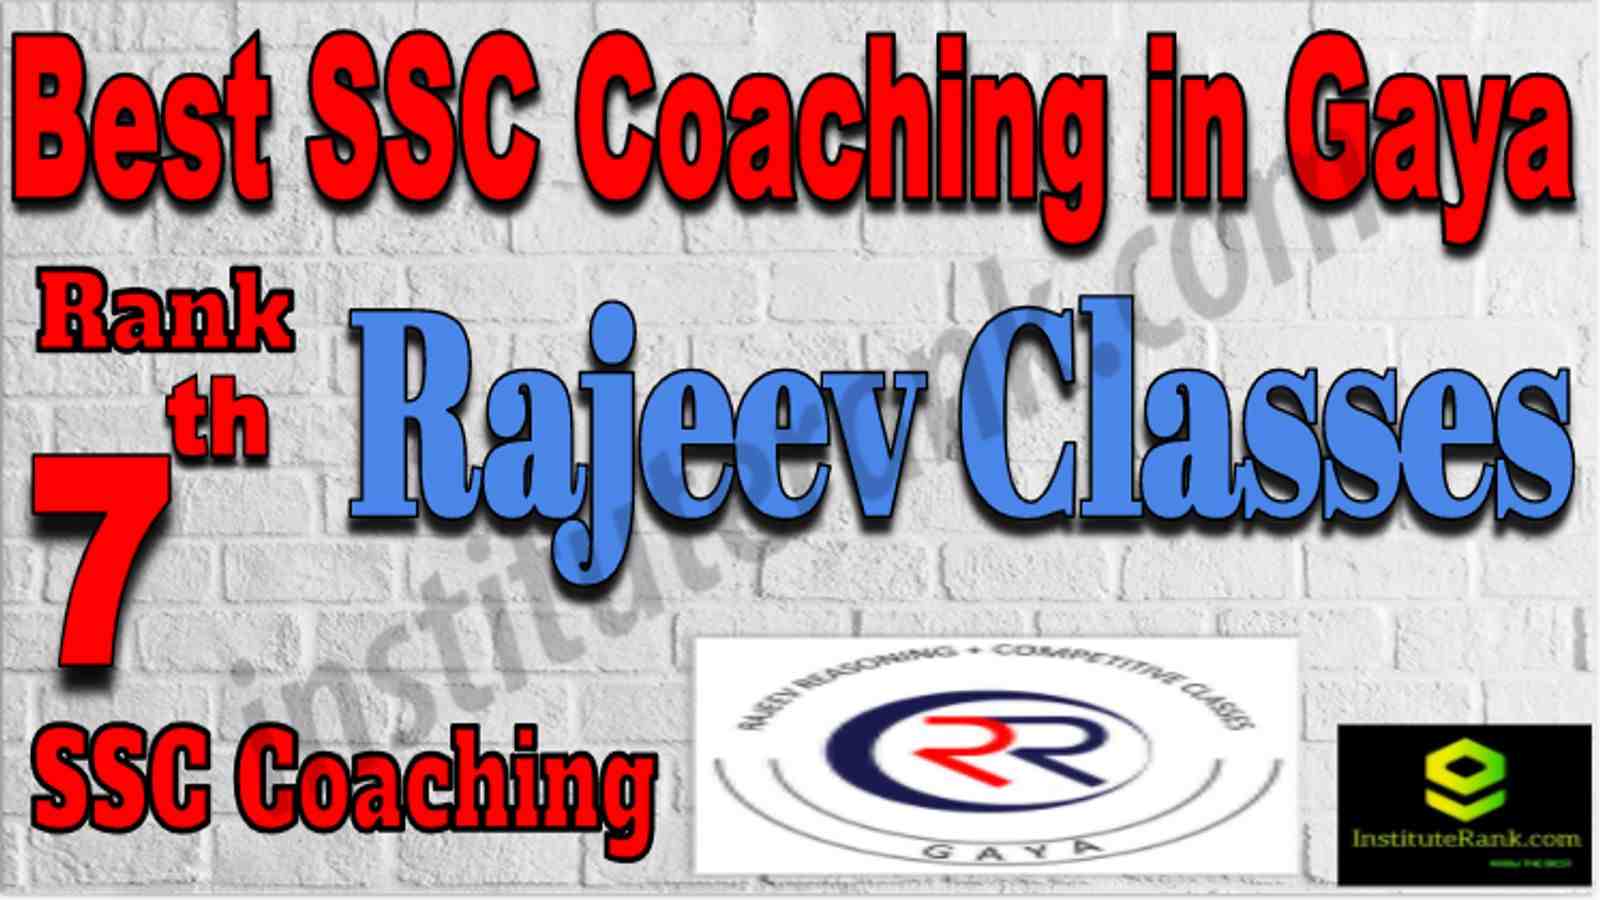 Rank 7 Best SSC Coaching in Gaya